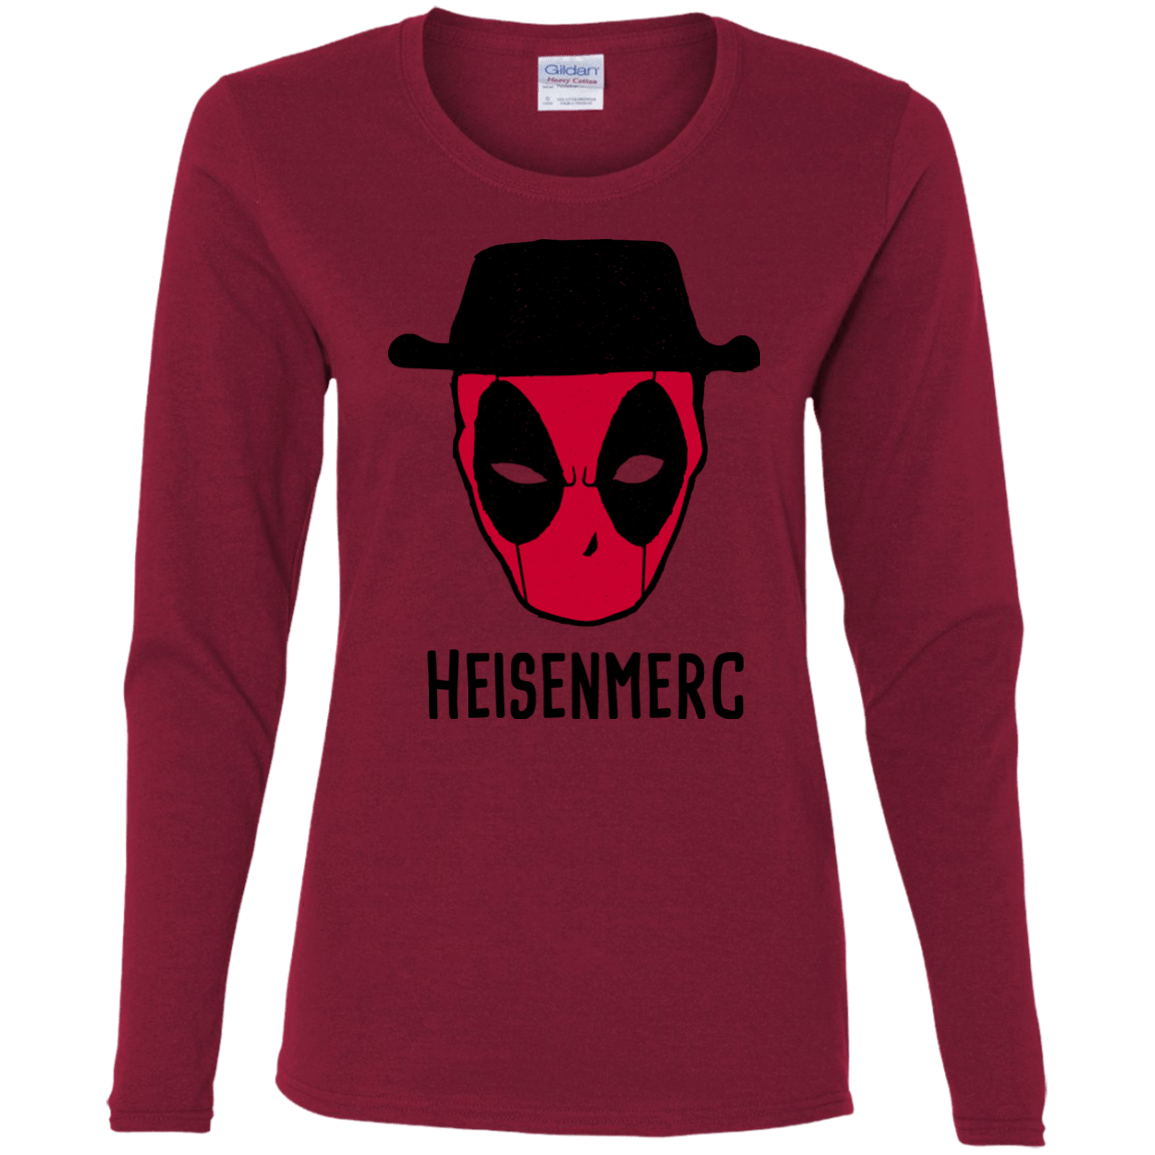 T-Shirts Cardinal / S Heisenmerc Women's Long Sleeve T-Shirt